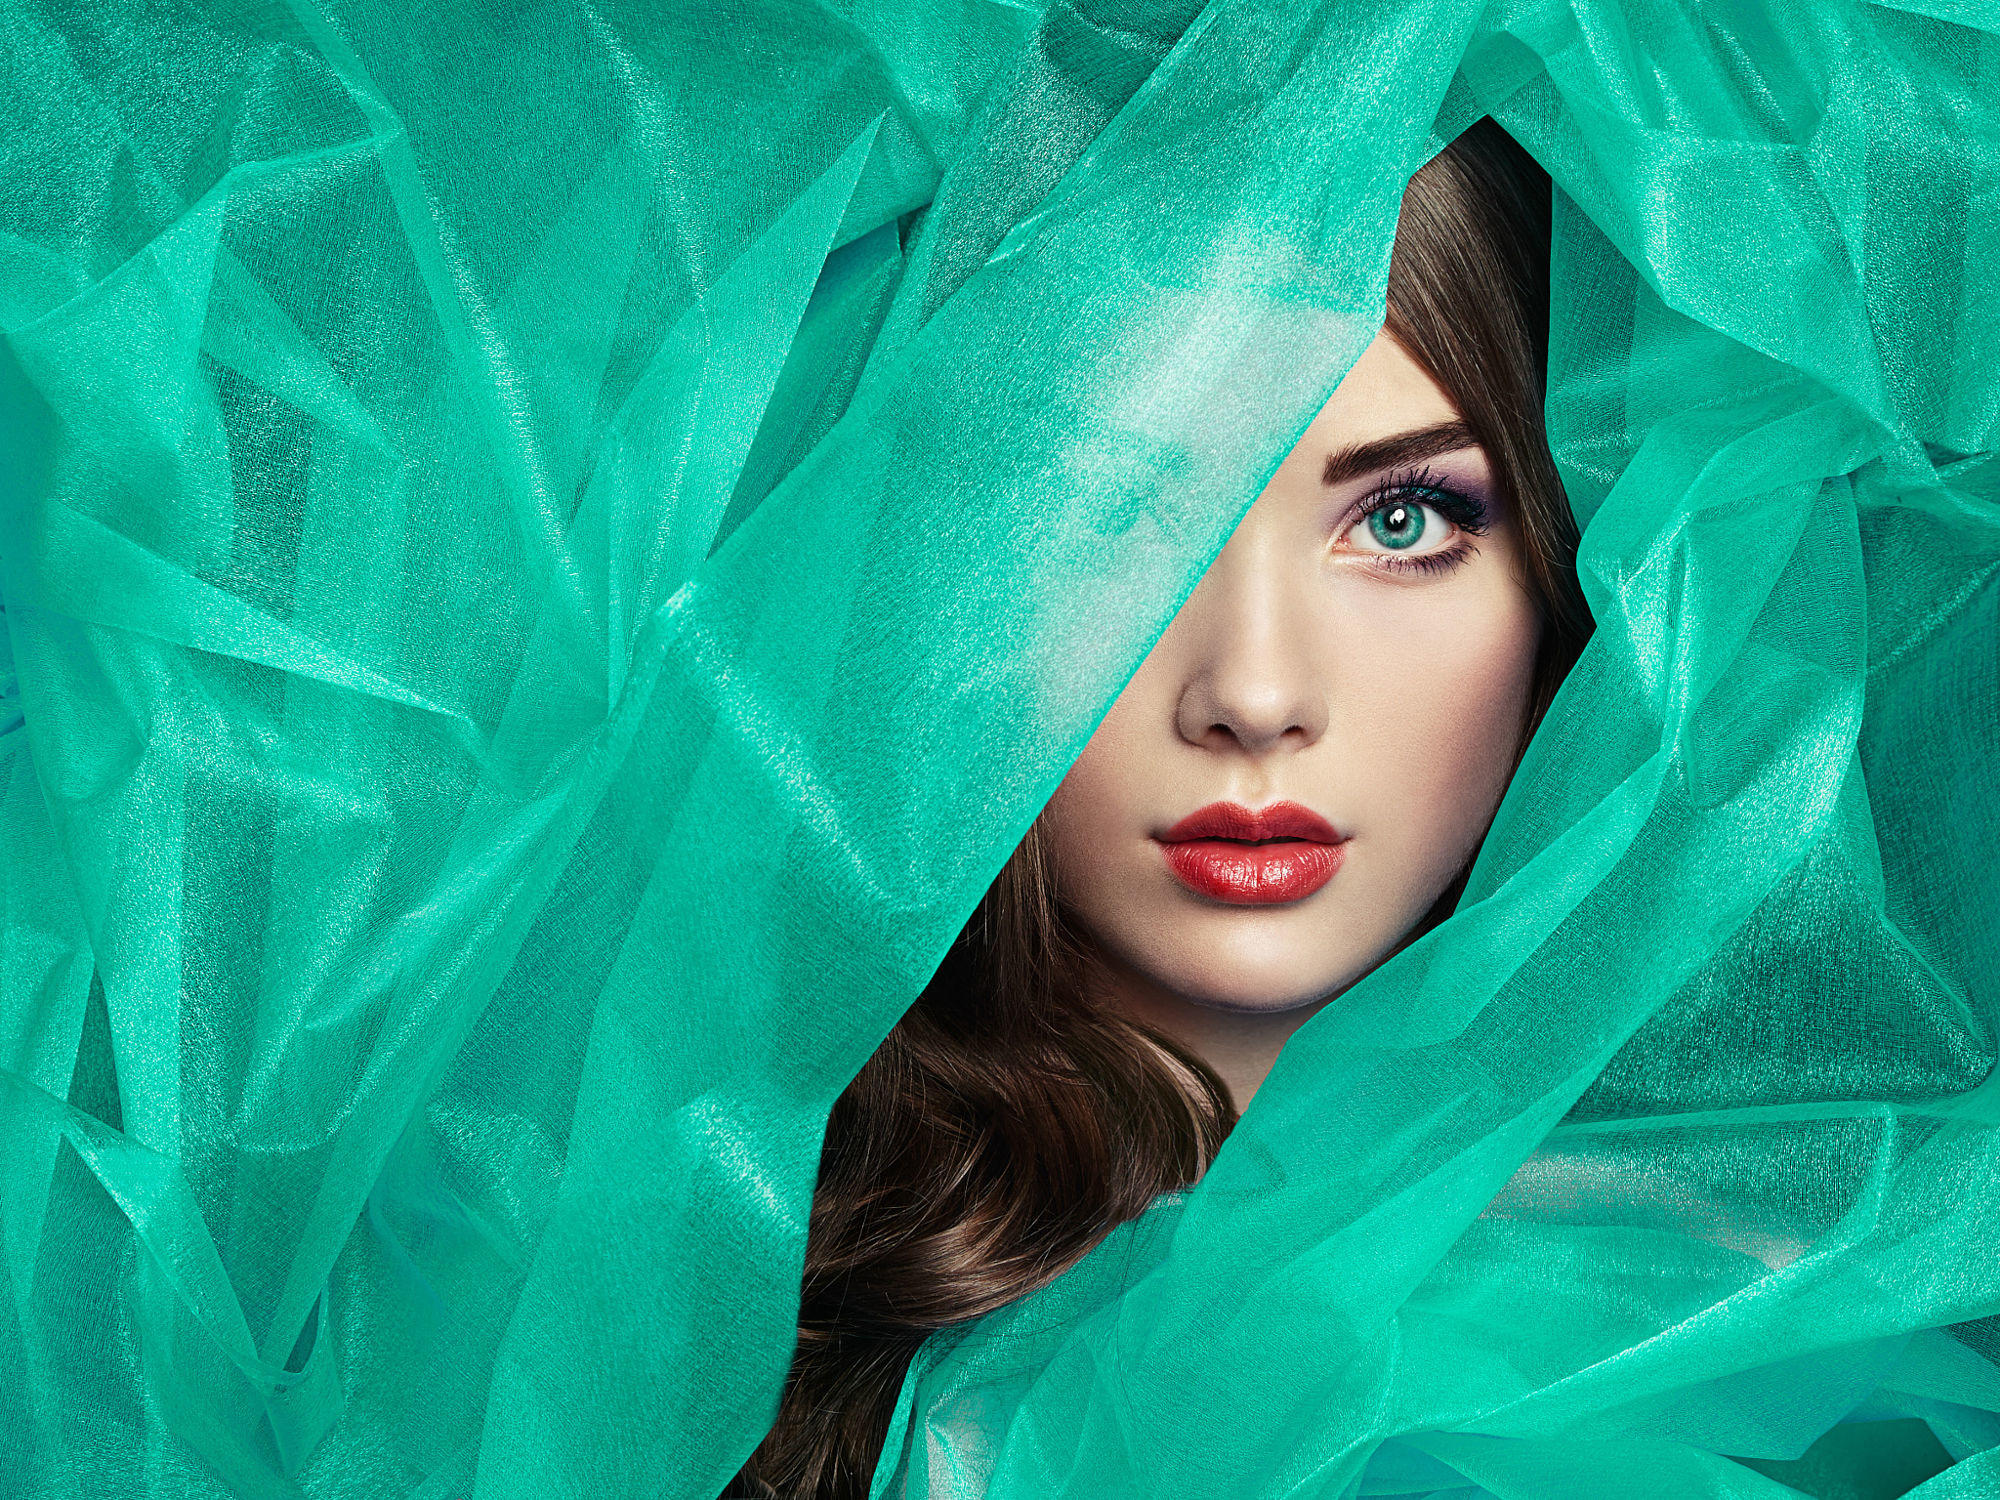 Fashion photo of beautiful women under turquoise veil